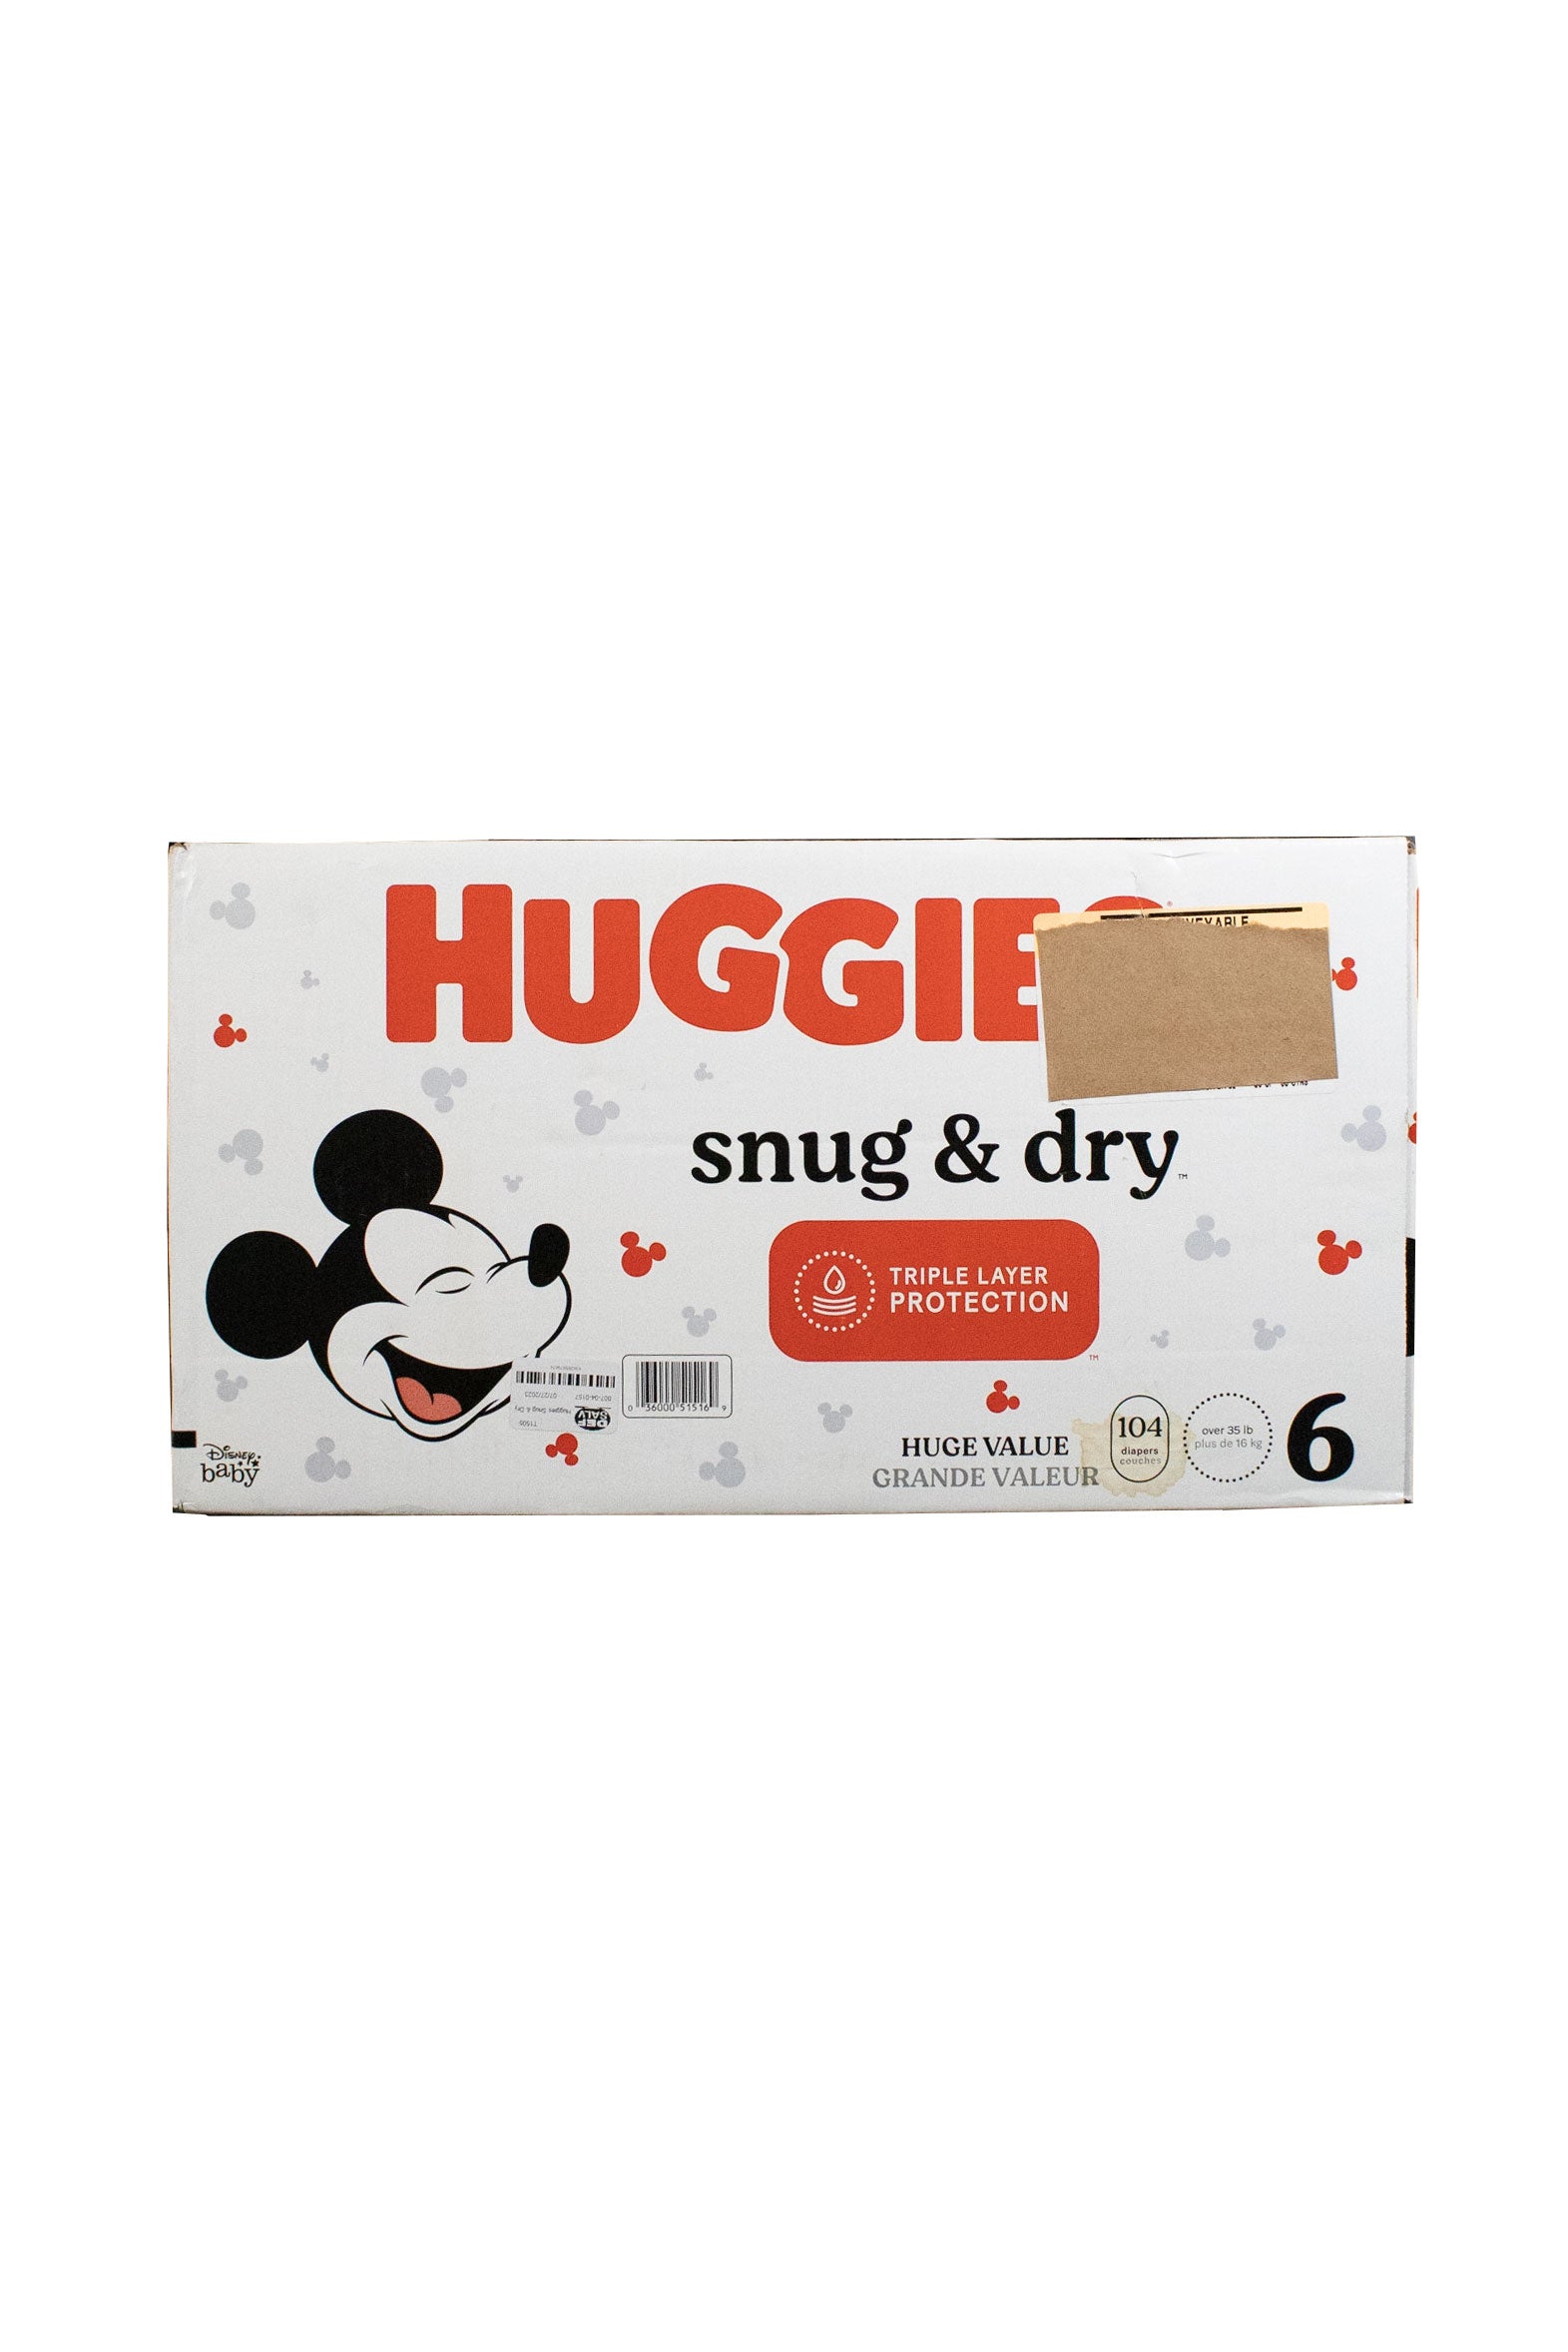 Huggies Snug & Dry Diapers, Disney Baby, 6 (Over 35 lb) - 104 diapers